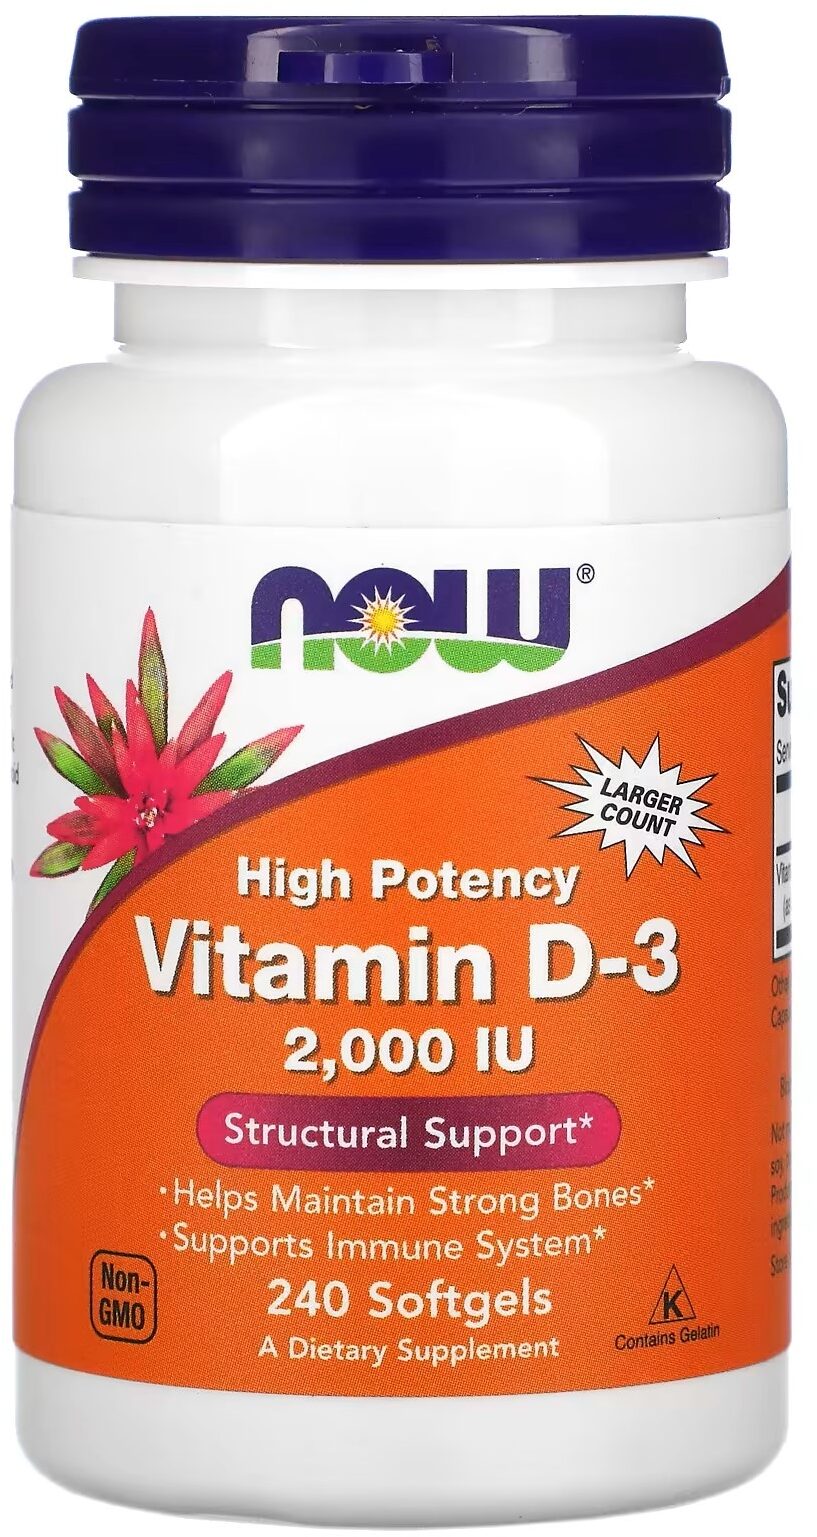 High potency vitamin D3 - Produkt - en